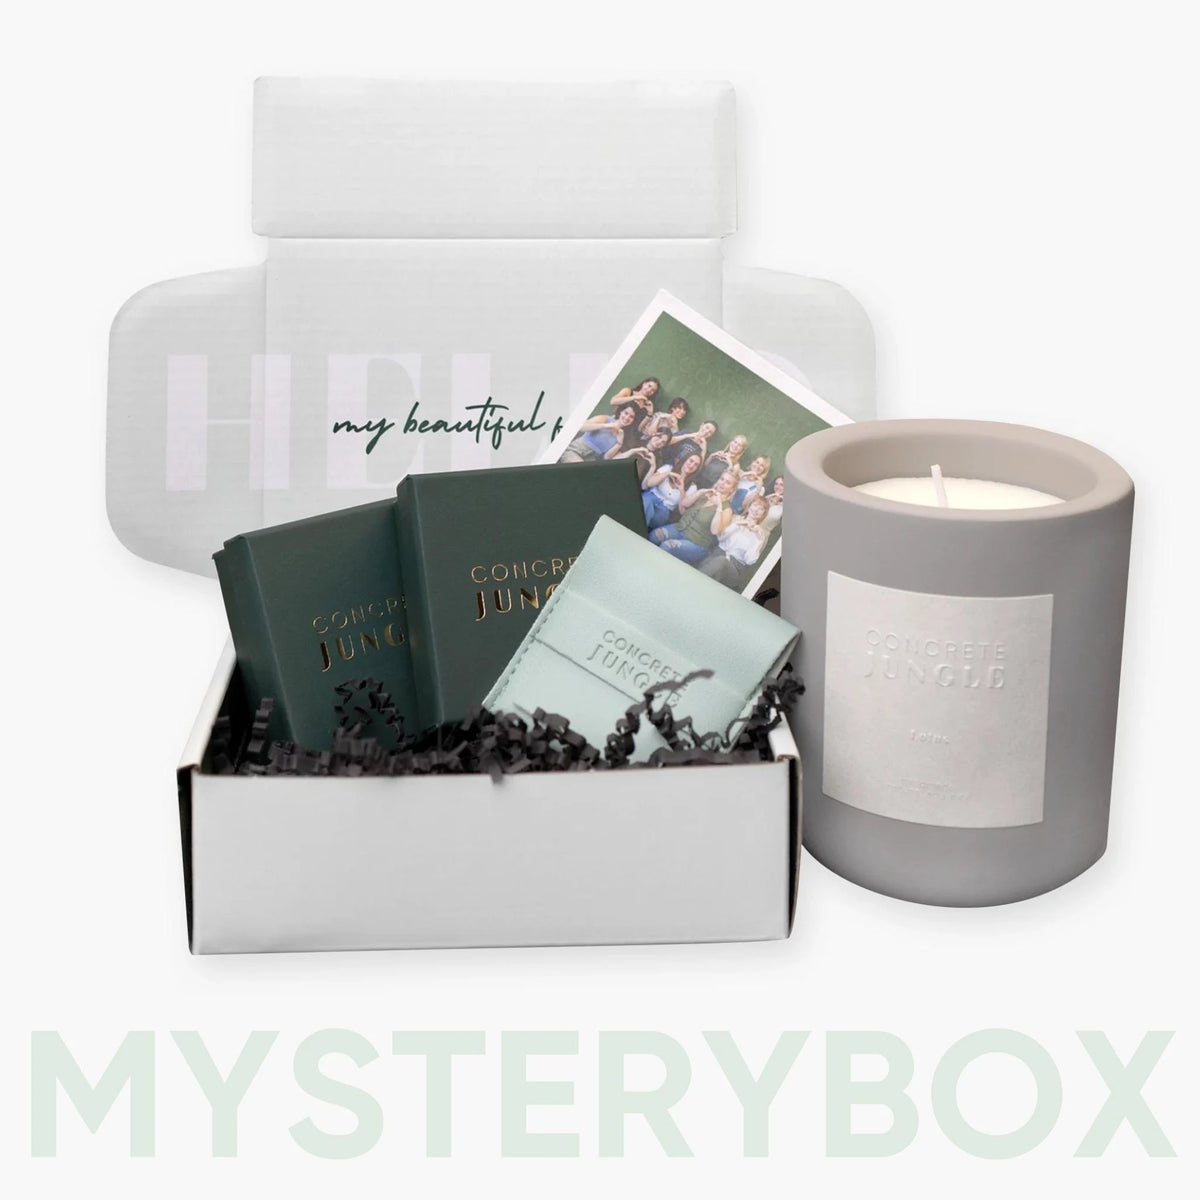 Surprise box MYSTERY